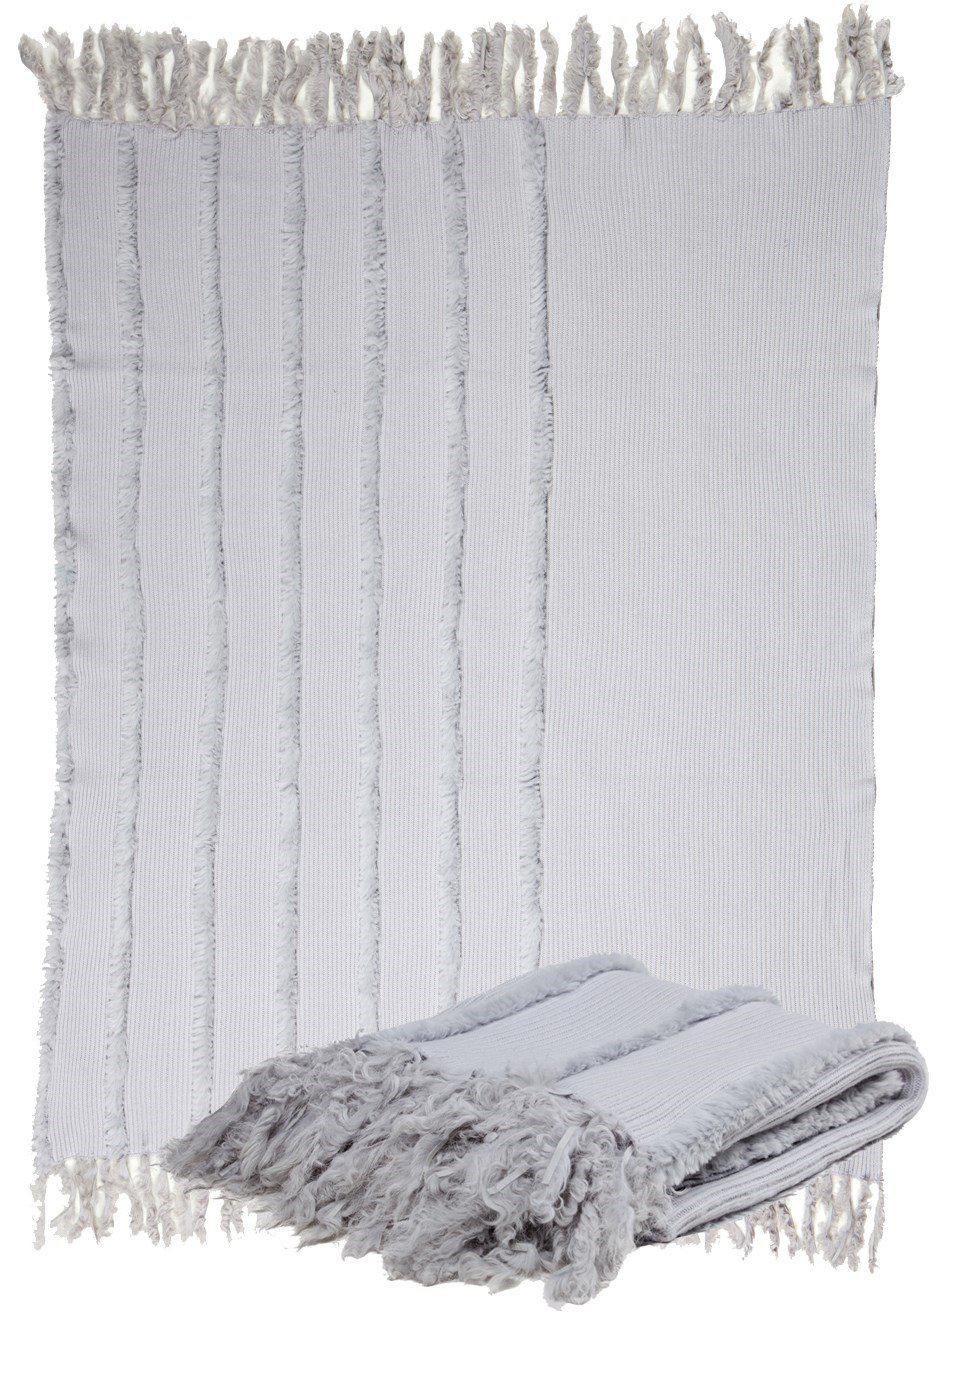 Throw Wool Rabbit Vertical 2 Glacier Grey-Fibre-Throw blankets-Artistic Elements